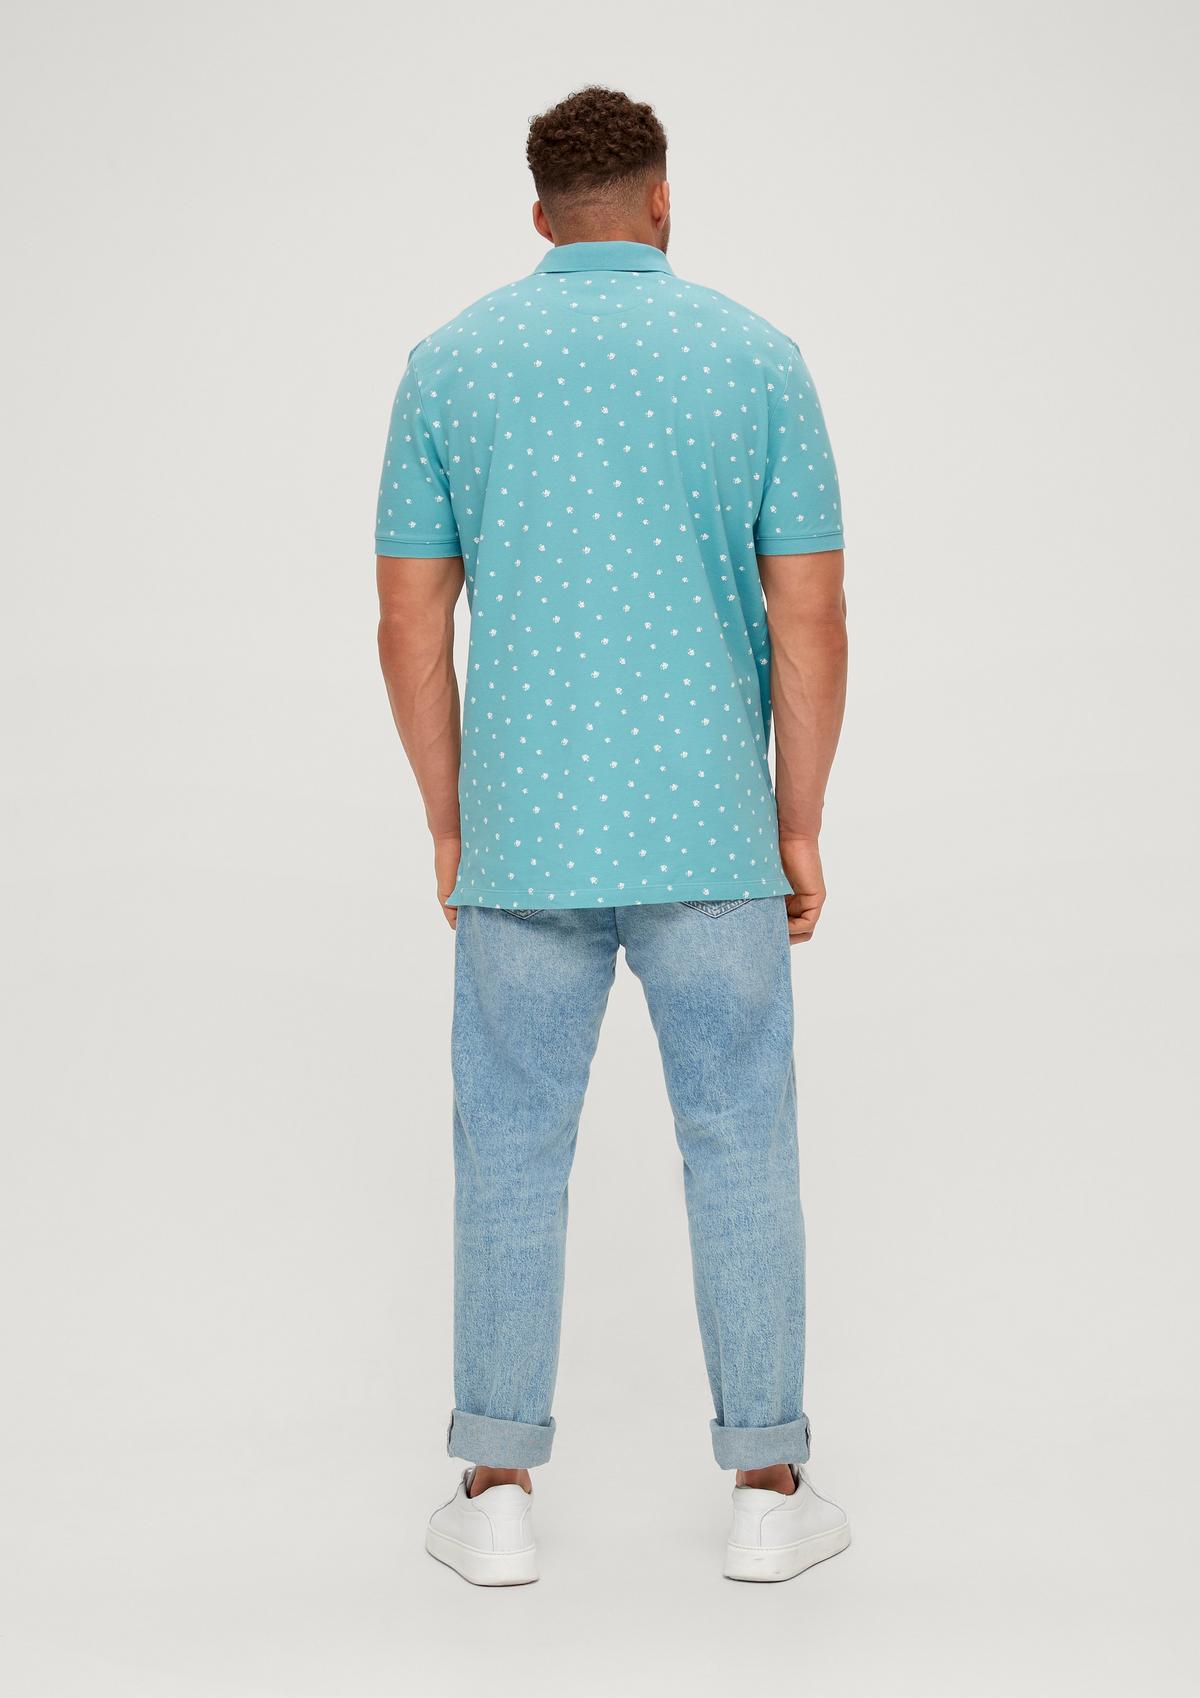 Polo shirt with a minimalist print - navy